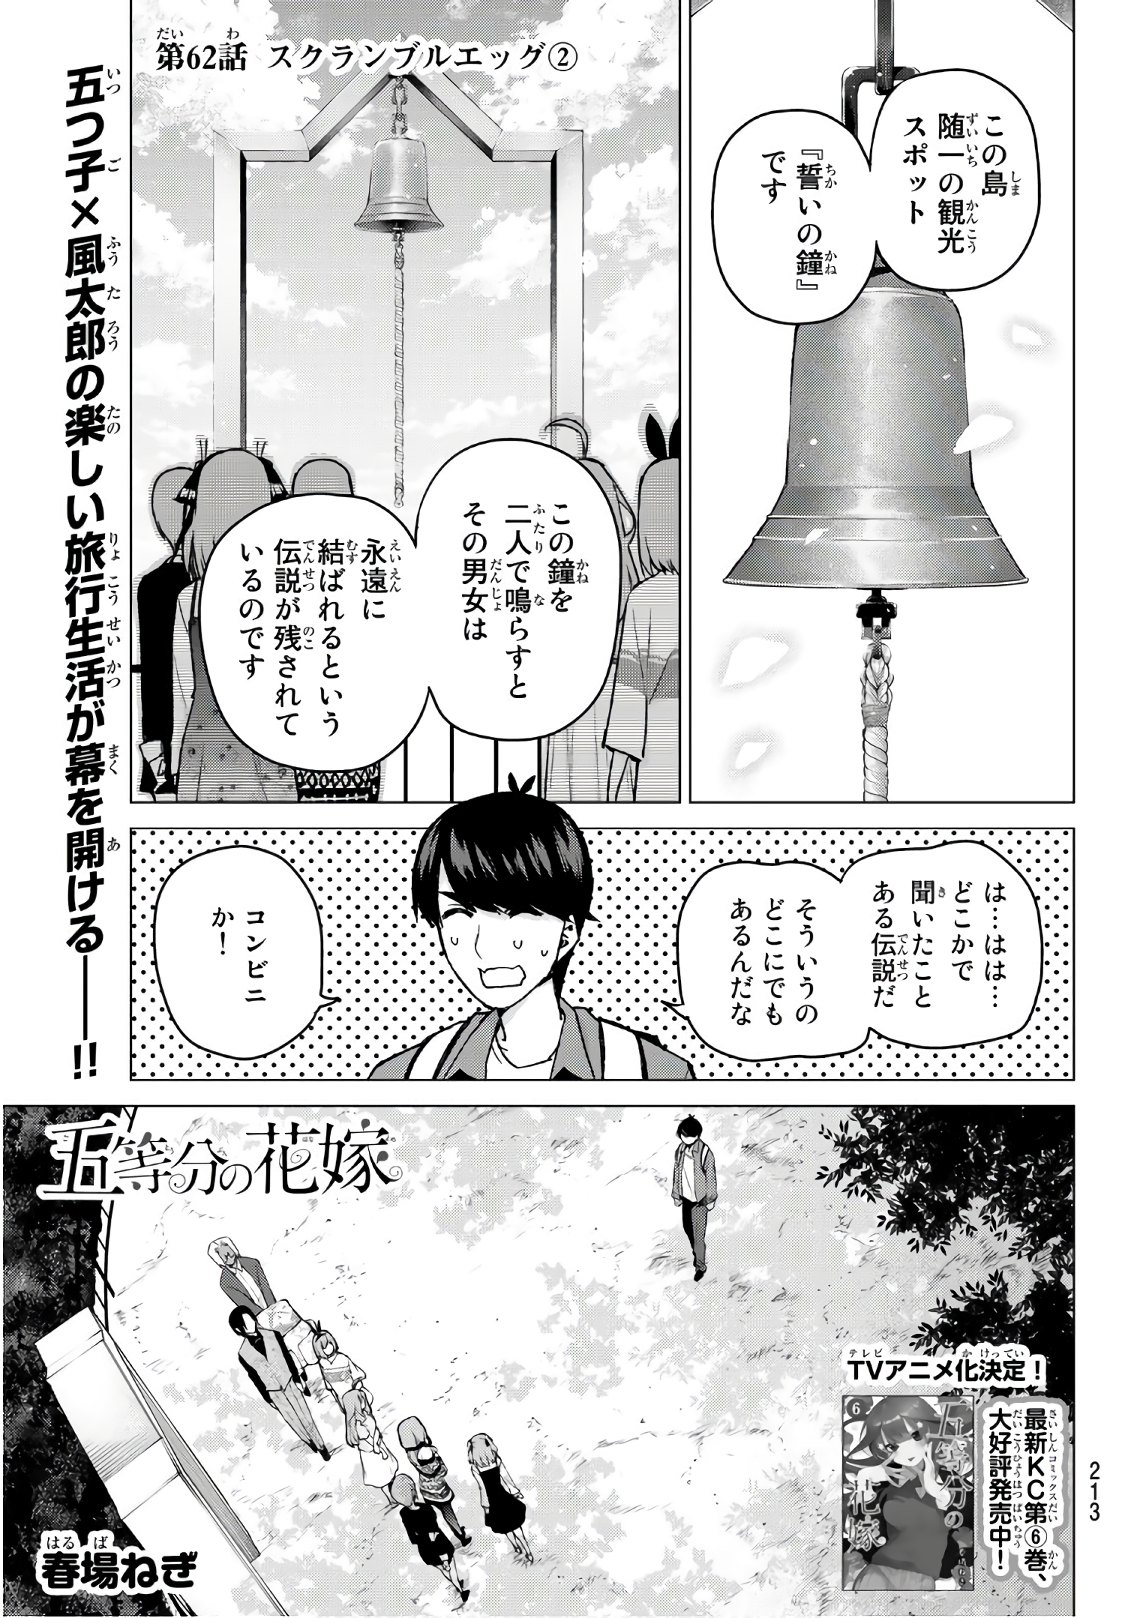 DenZero - Gasp! Manga: 5-toubun No Hanayome (Quintessential Quintuplets)  [Chapter 113]